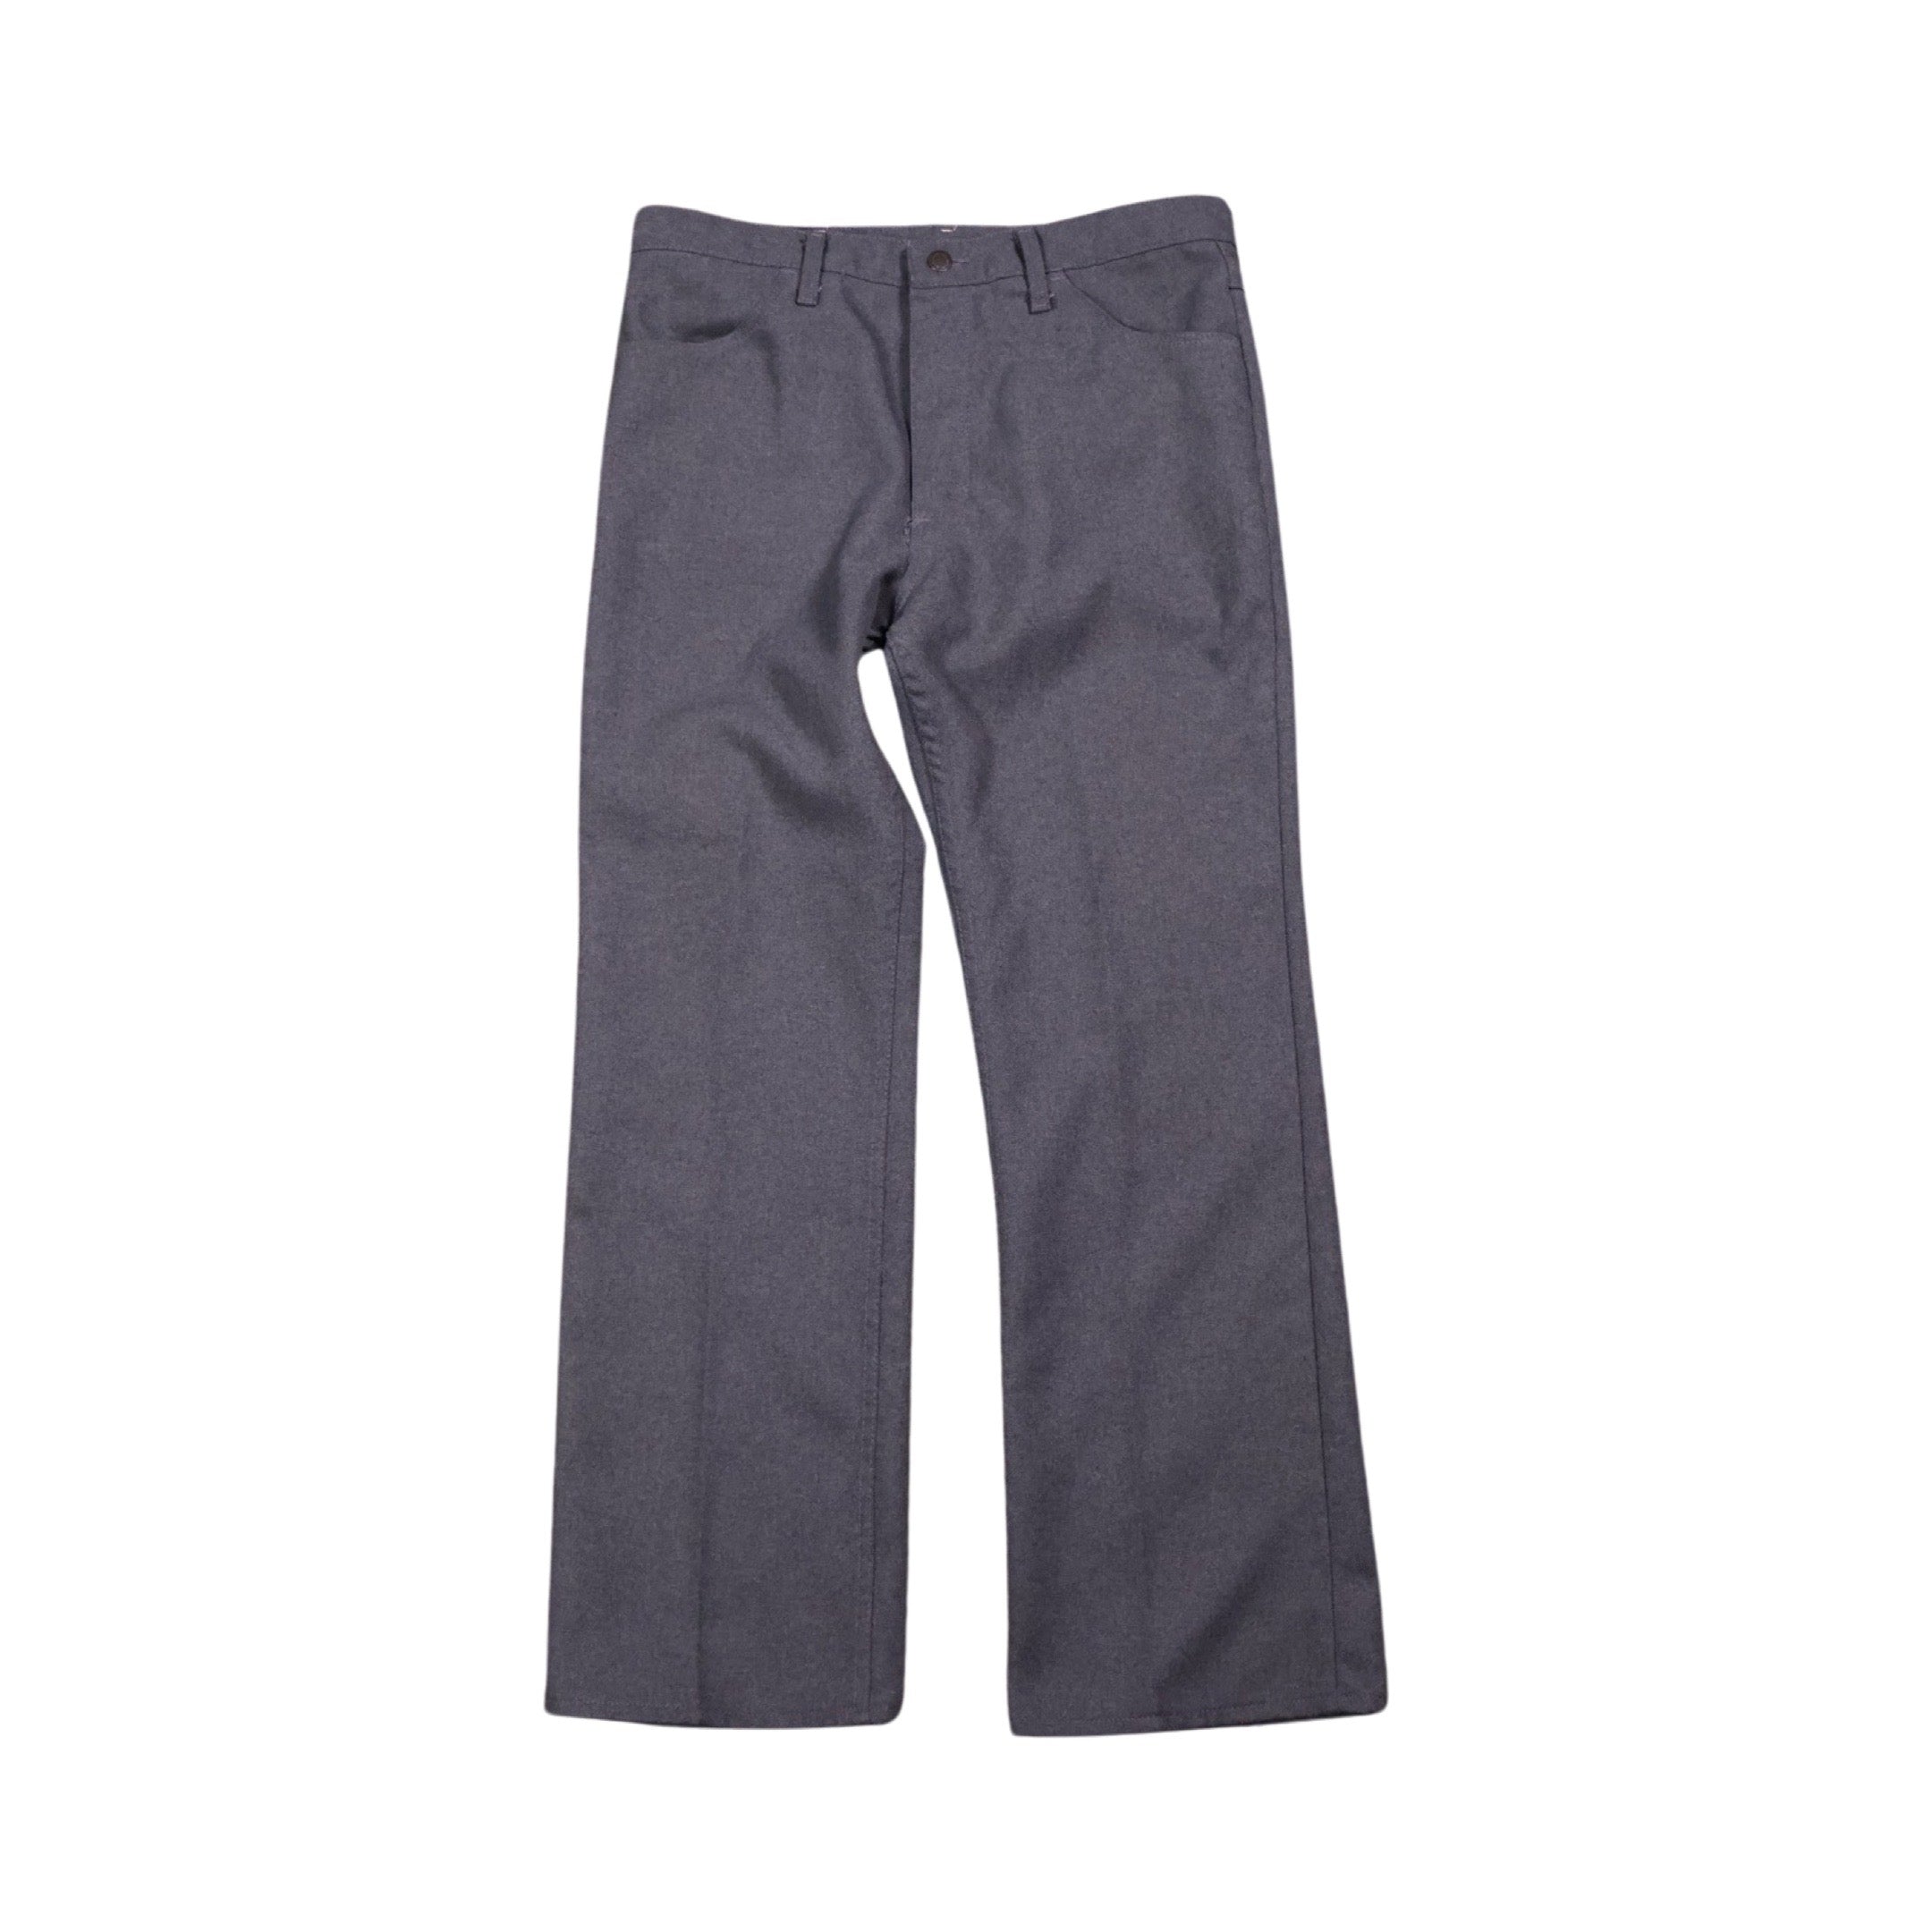 Gray Wrangler Wrancher Pants (34”)